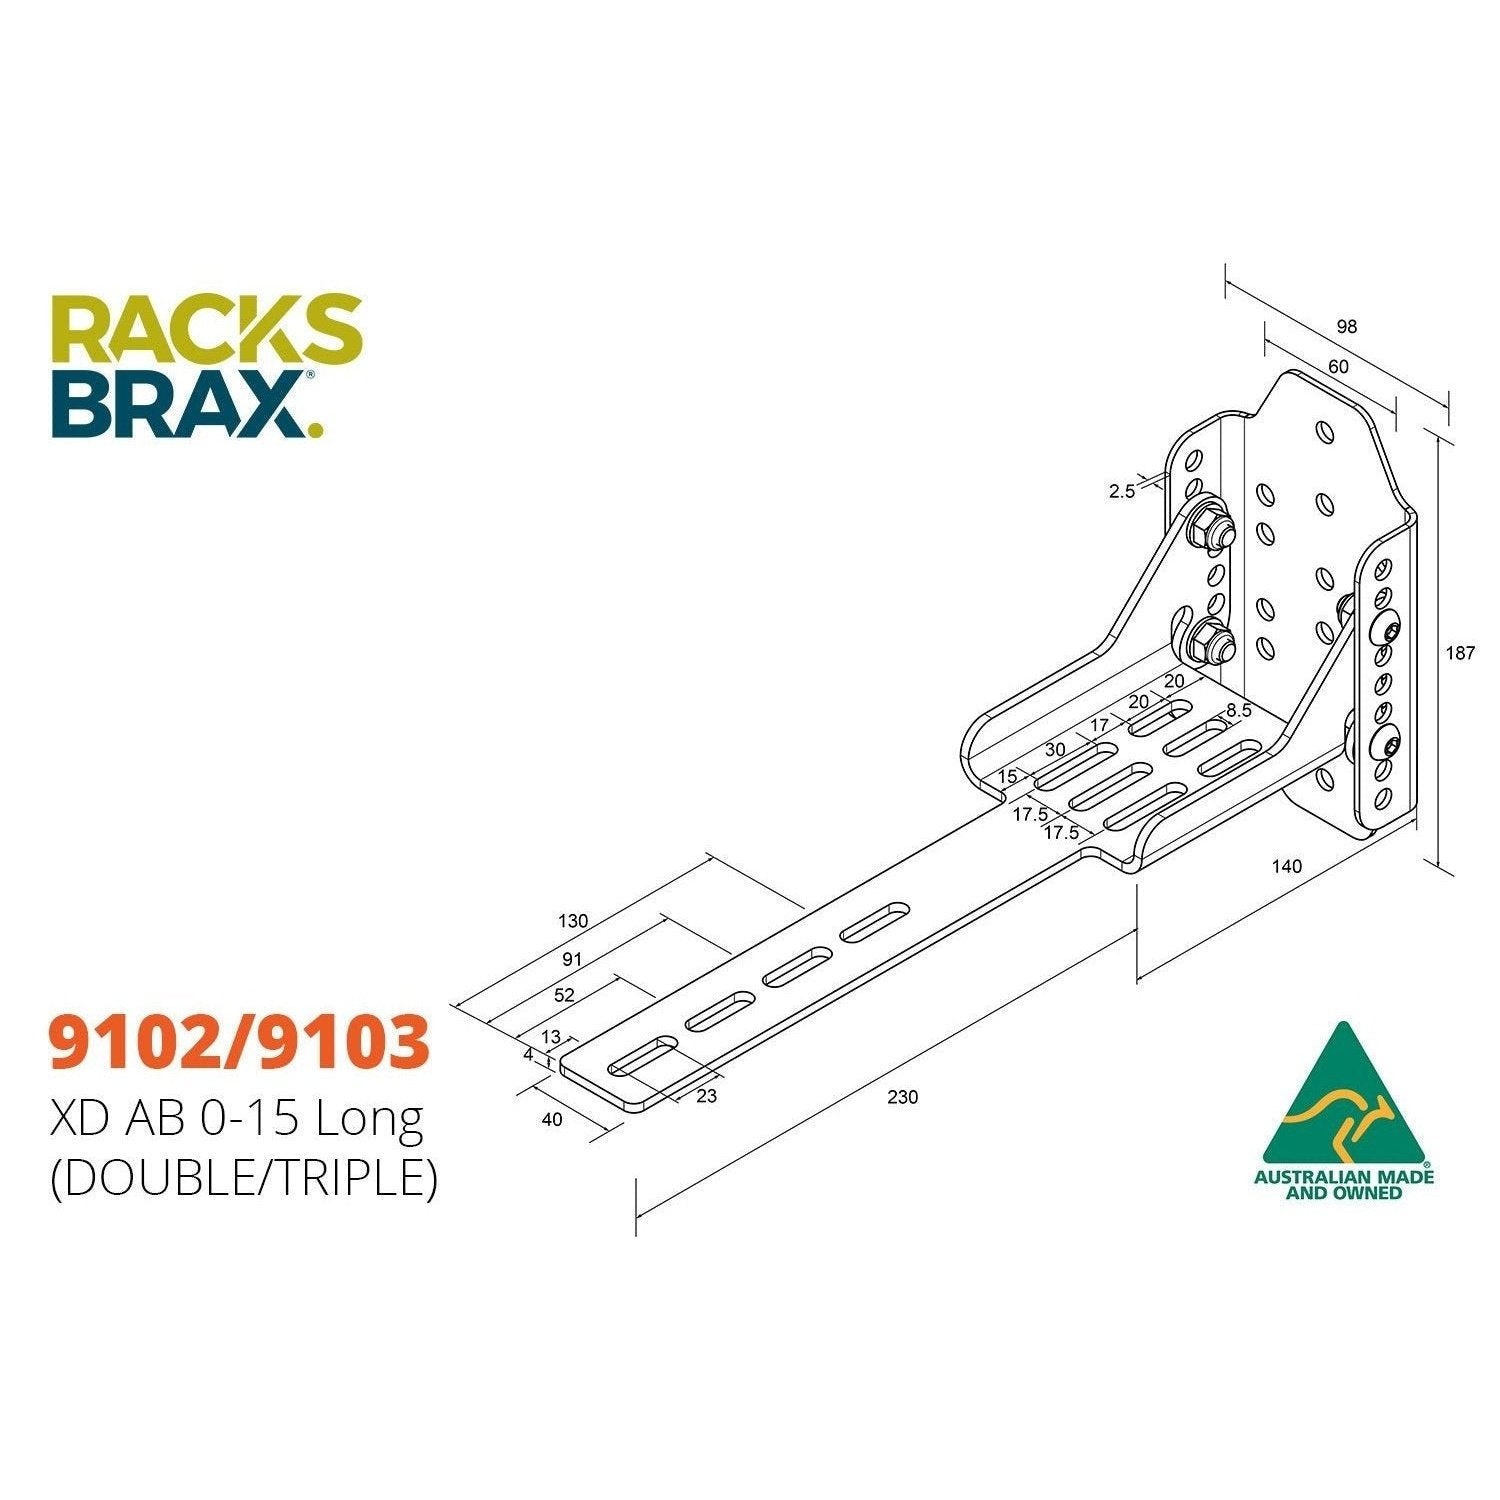 XD adjustibale brackets -RacksBrax - AMD Touring